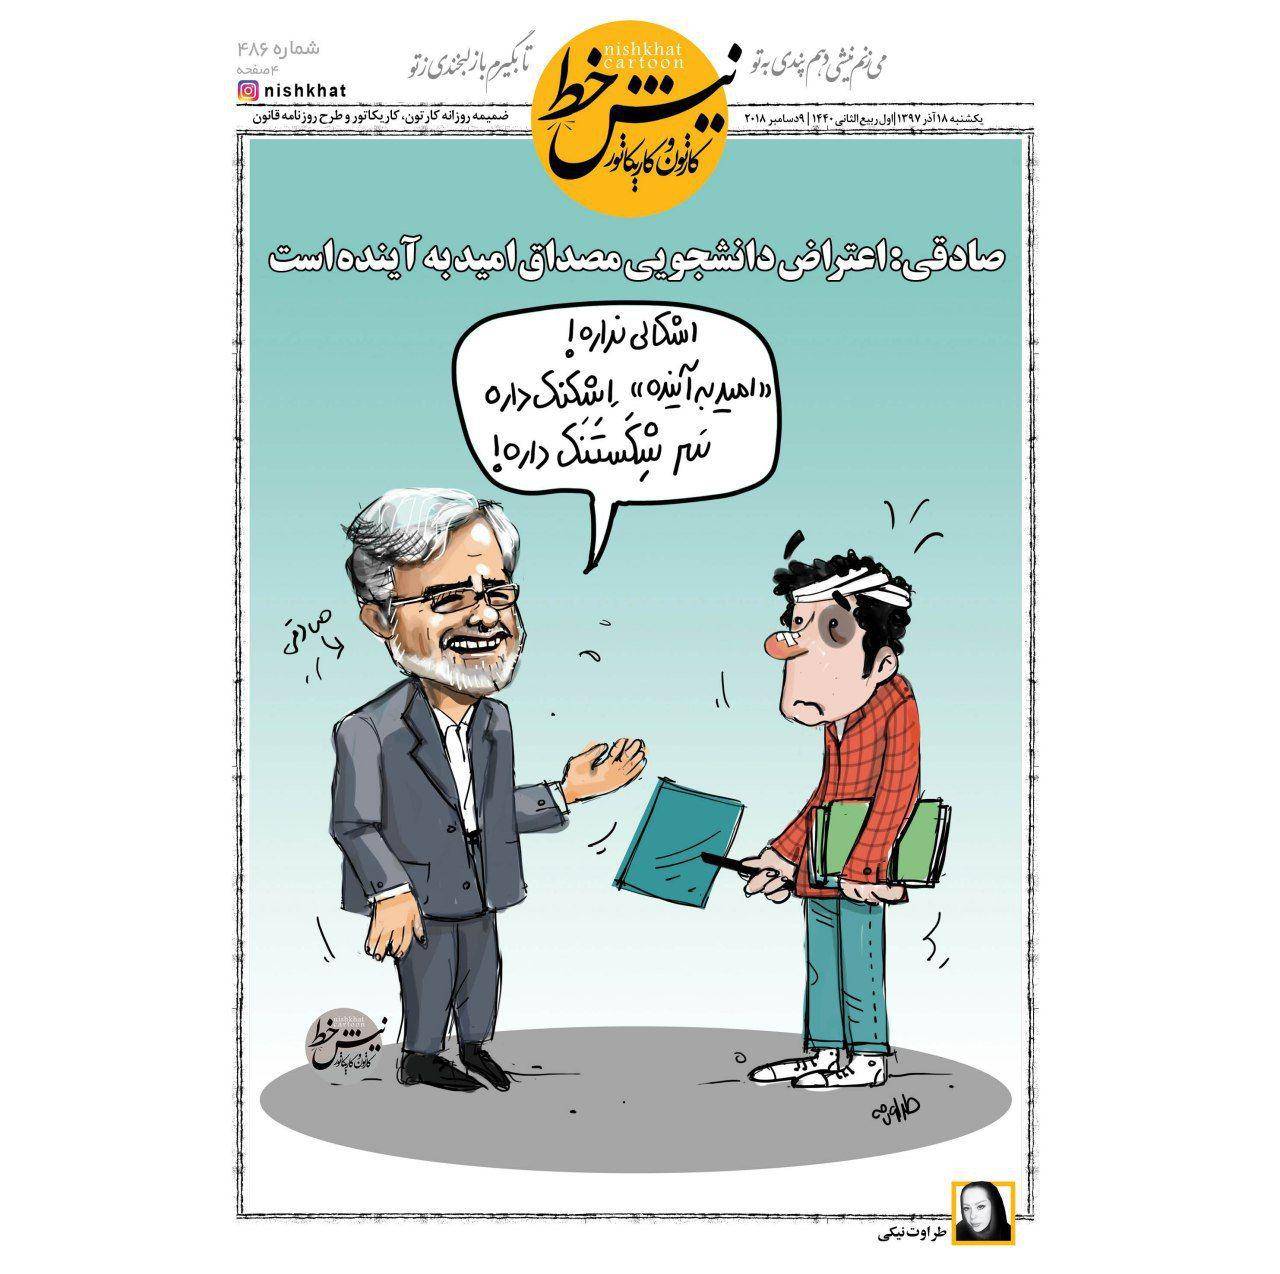 کاریکاتور صادقی و اعتراضات دانشجویی